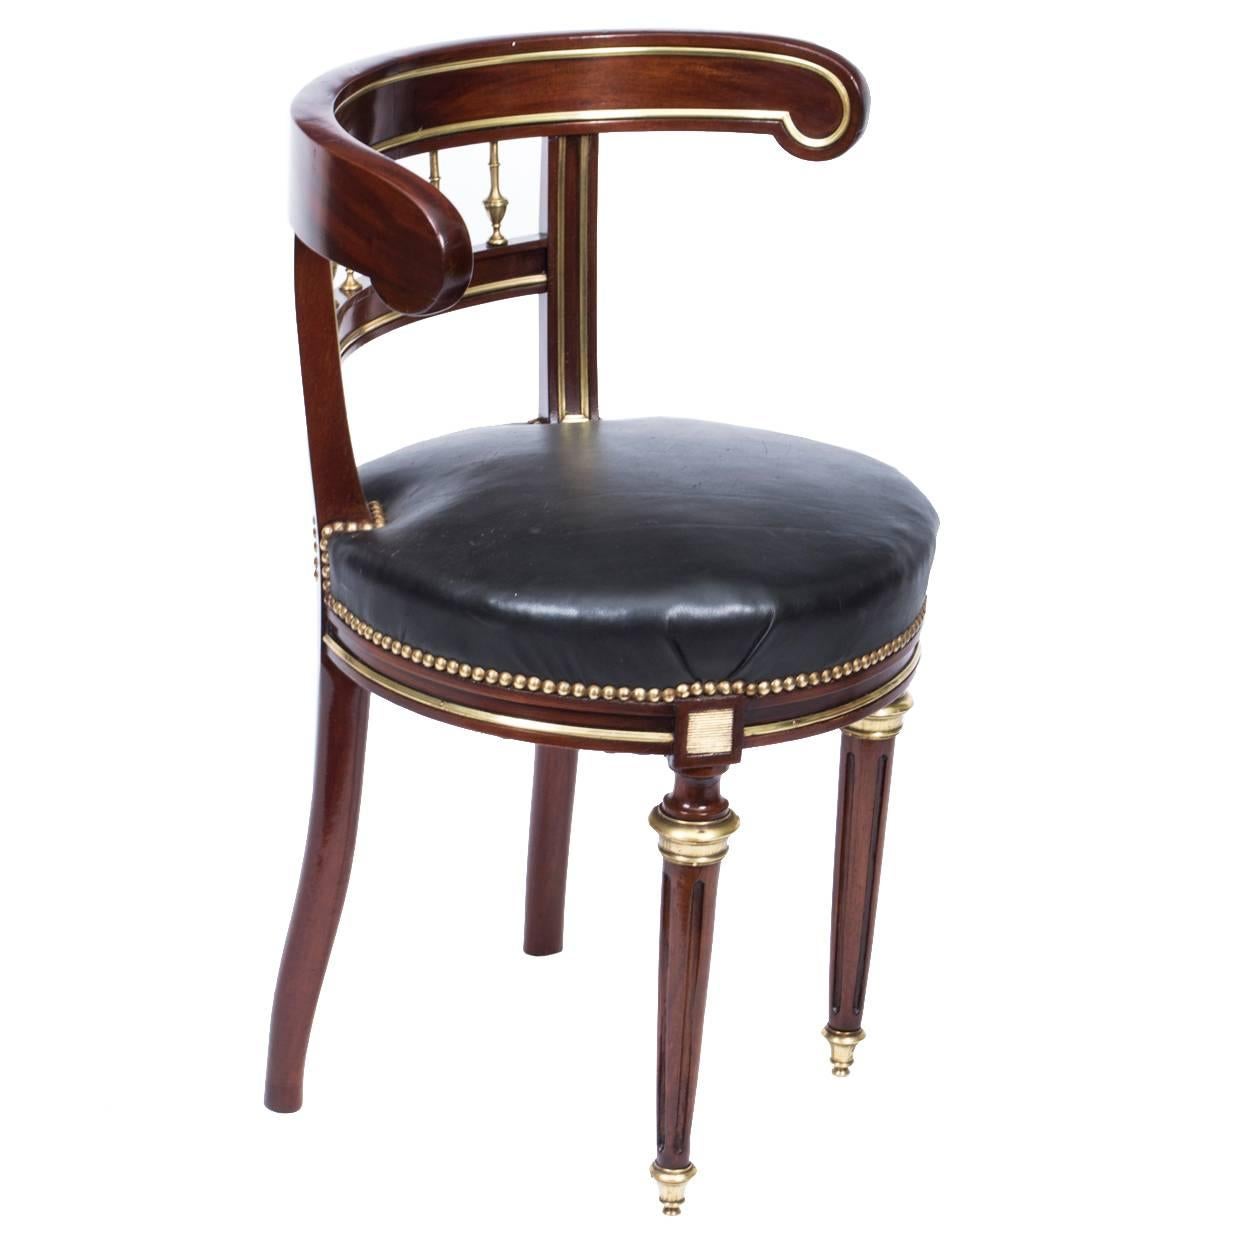 Antique French Empire Brass Inlaid Desk Music Chair, circa 1880